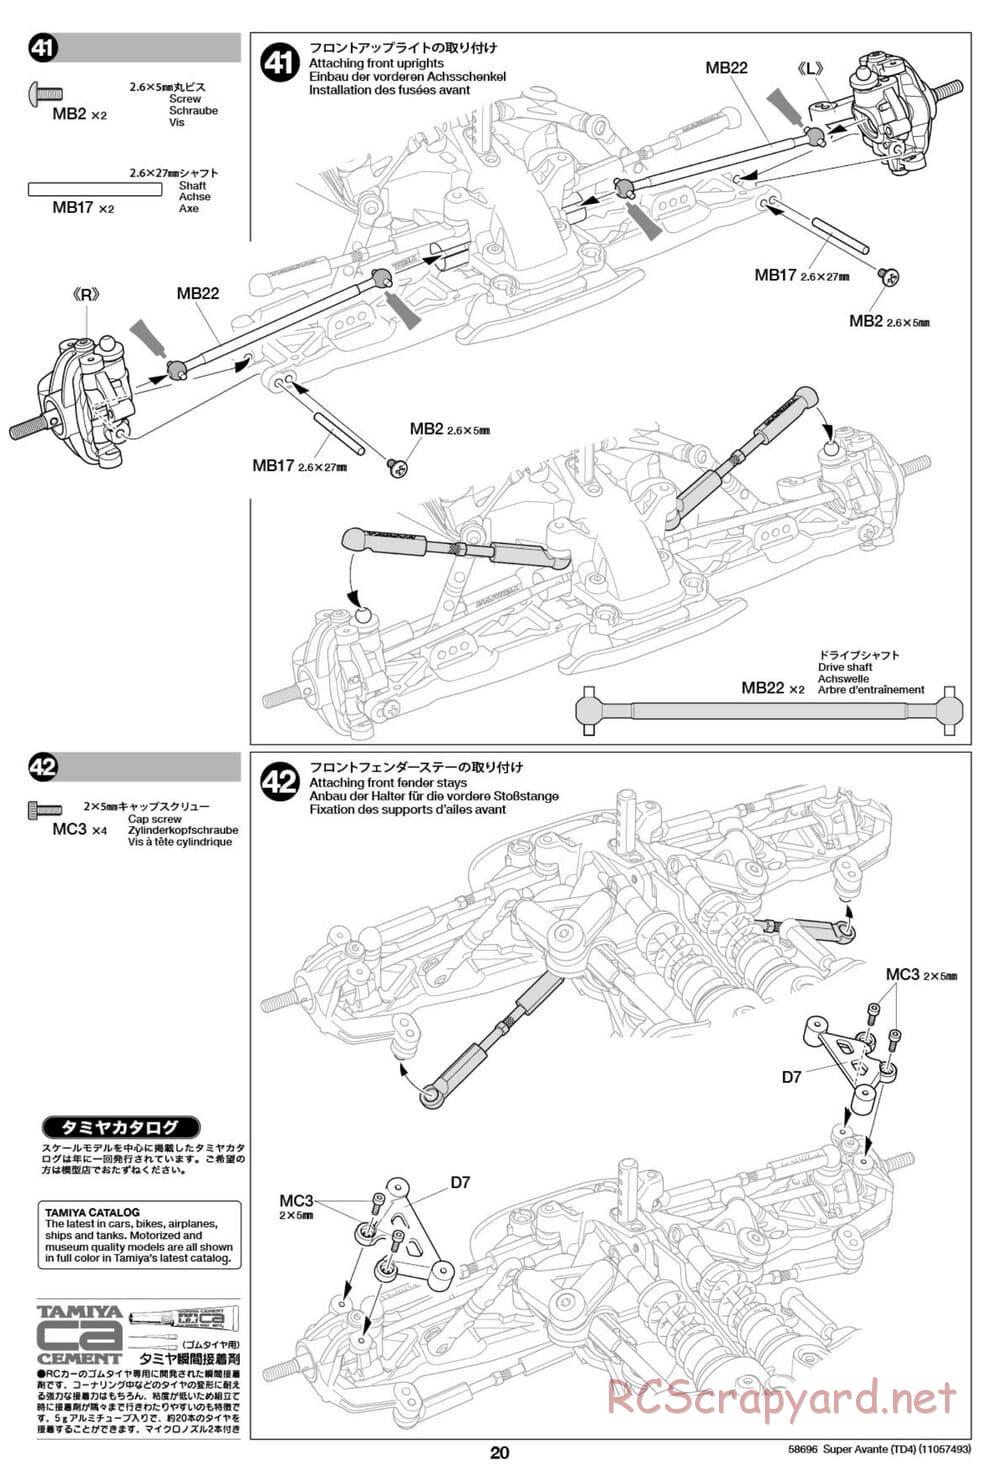 Tamiya - Super Avante - TD4 Chassis - Manual - Page 21